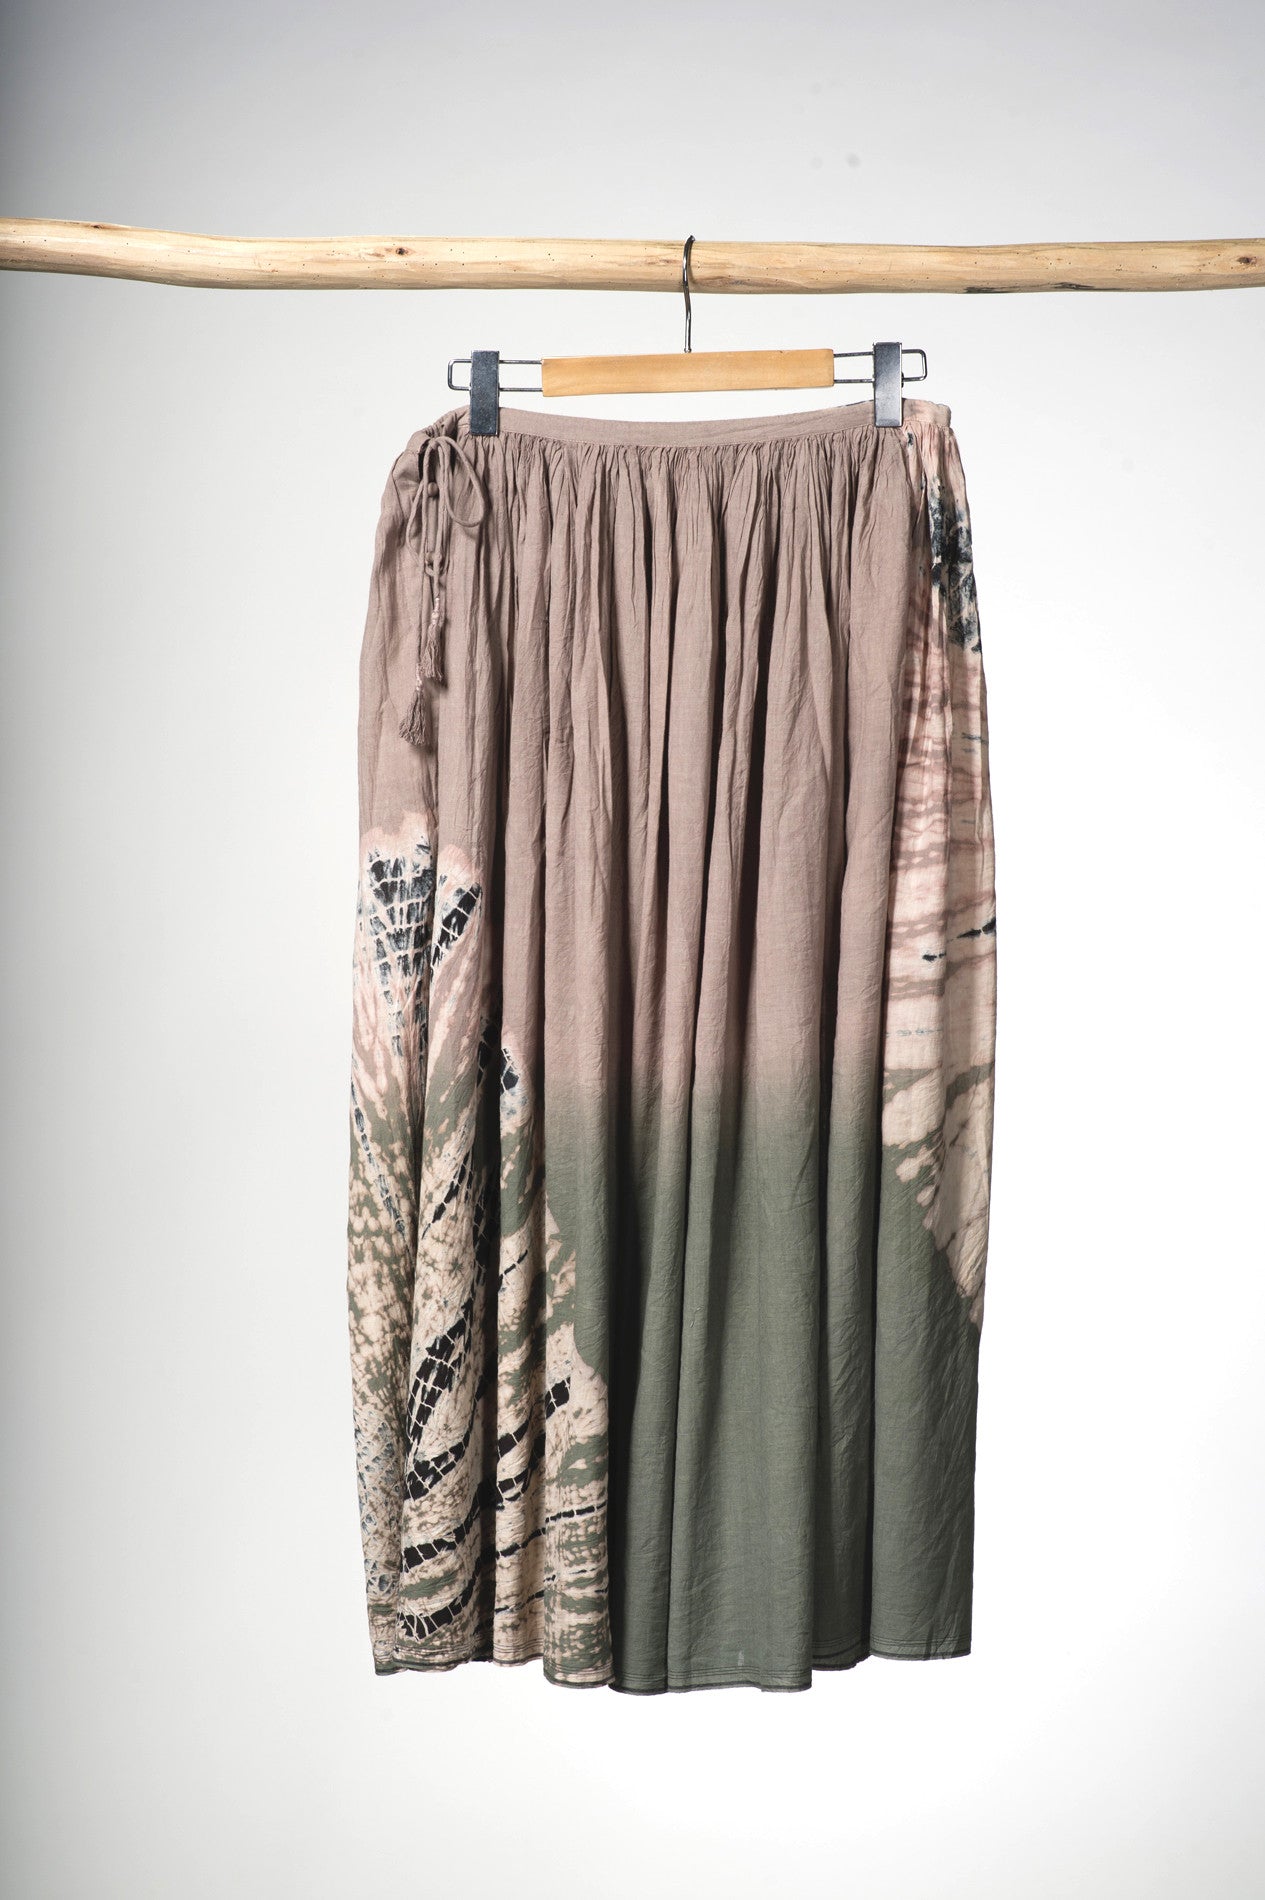 Tie and Dye Khaki long skirt